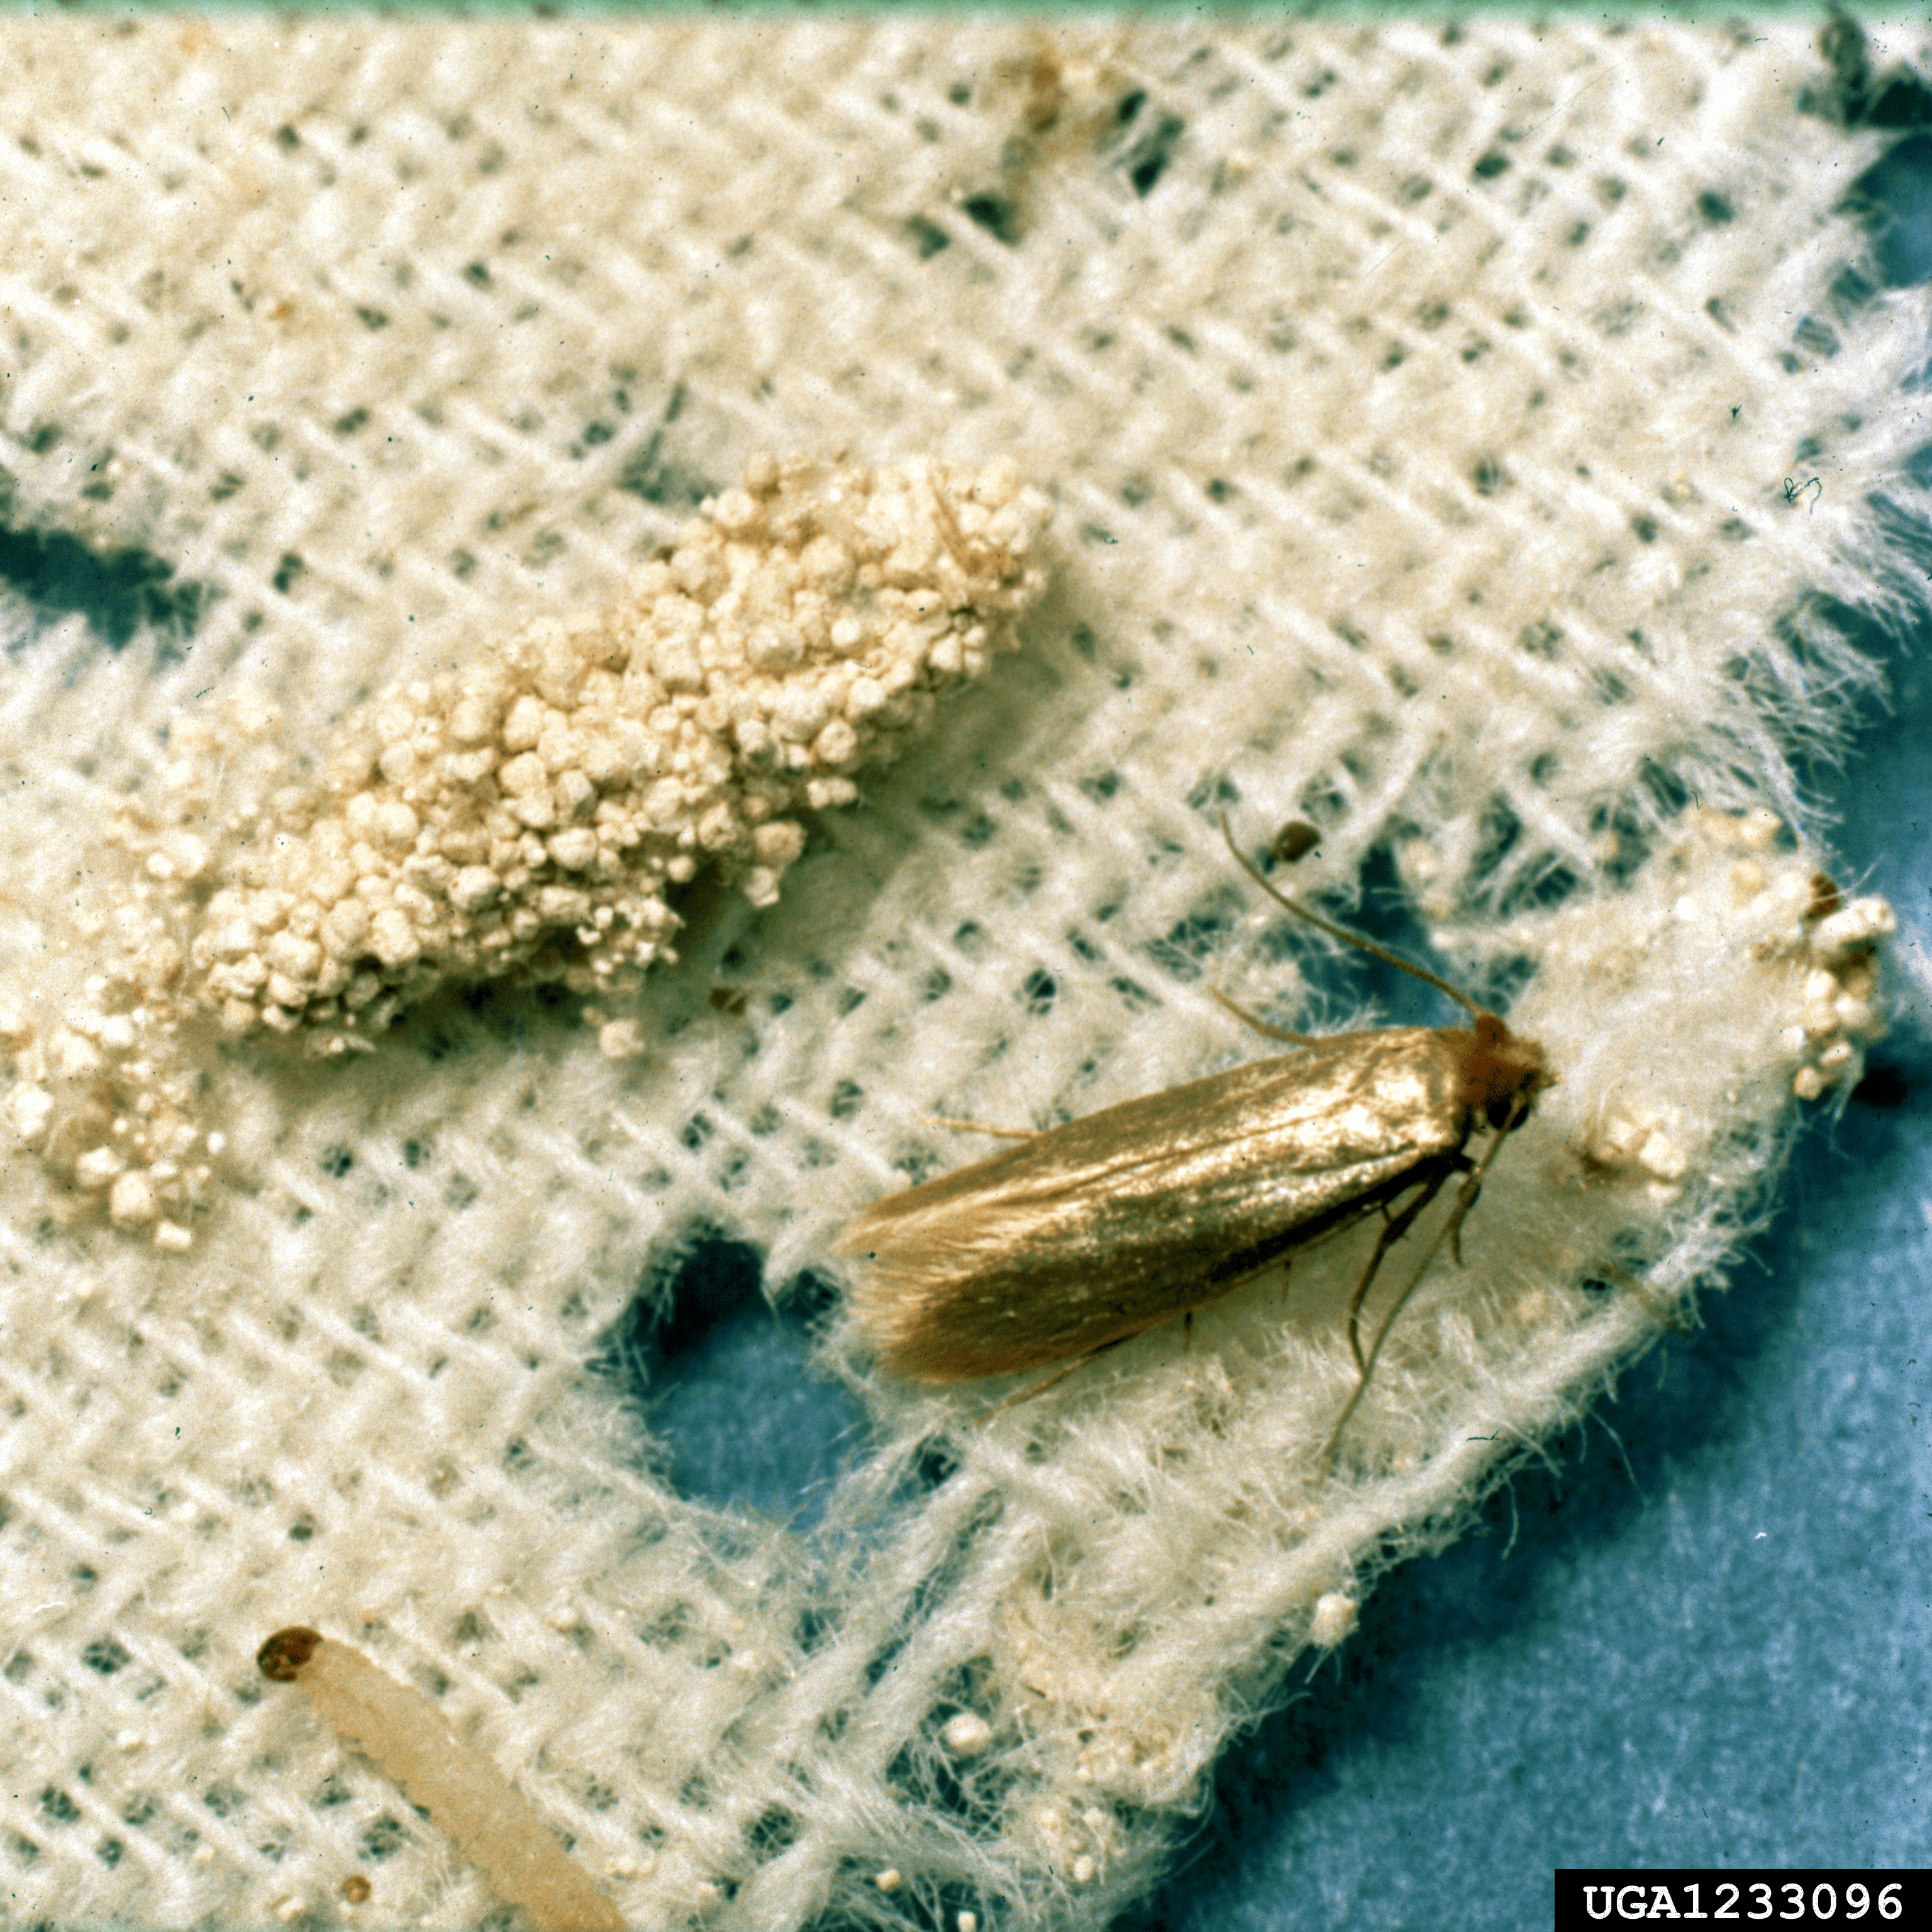 Cloths moth and cloths moth larvae eating fabric.